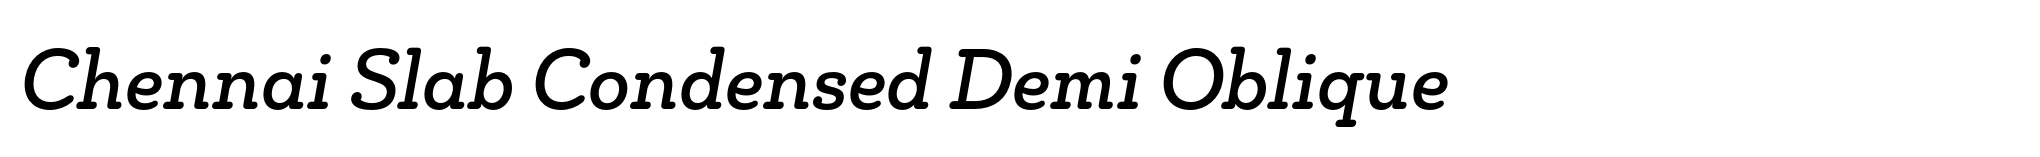 Chennai Slab Condensed Demi Oblique image